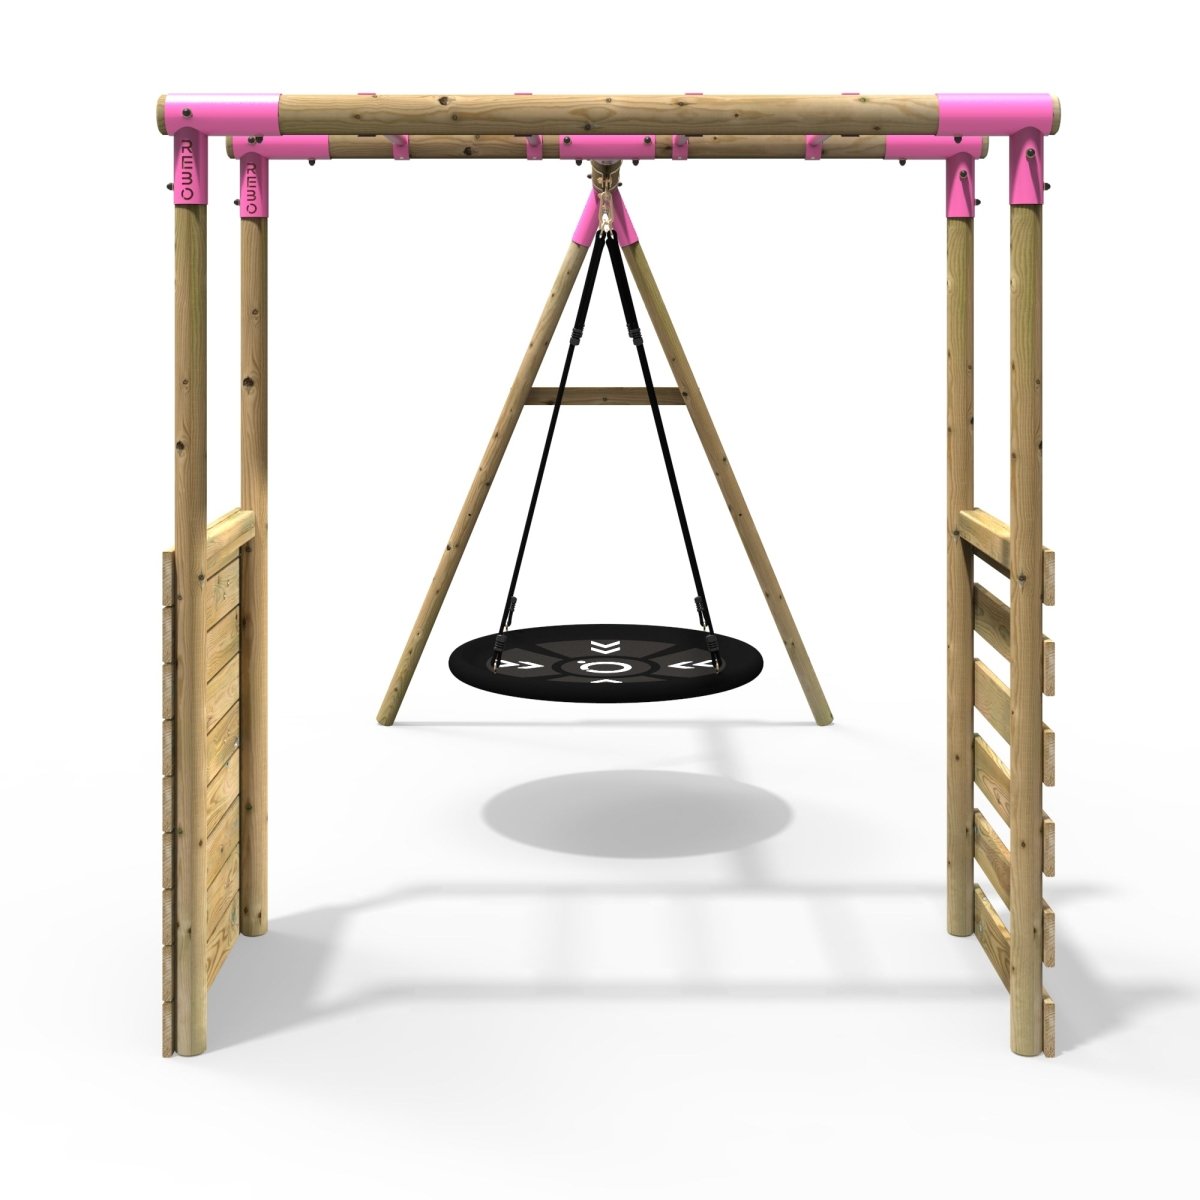 Rebo Wooden Garden Swing Set with Monkey Bars - Mercury Pink